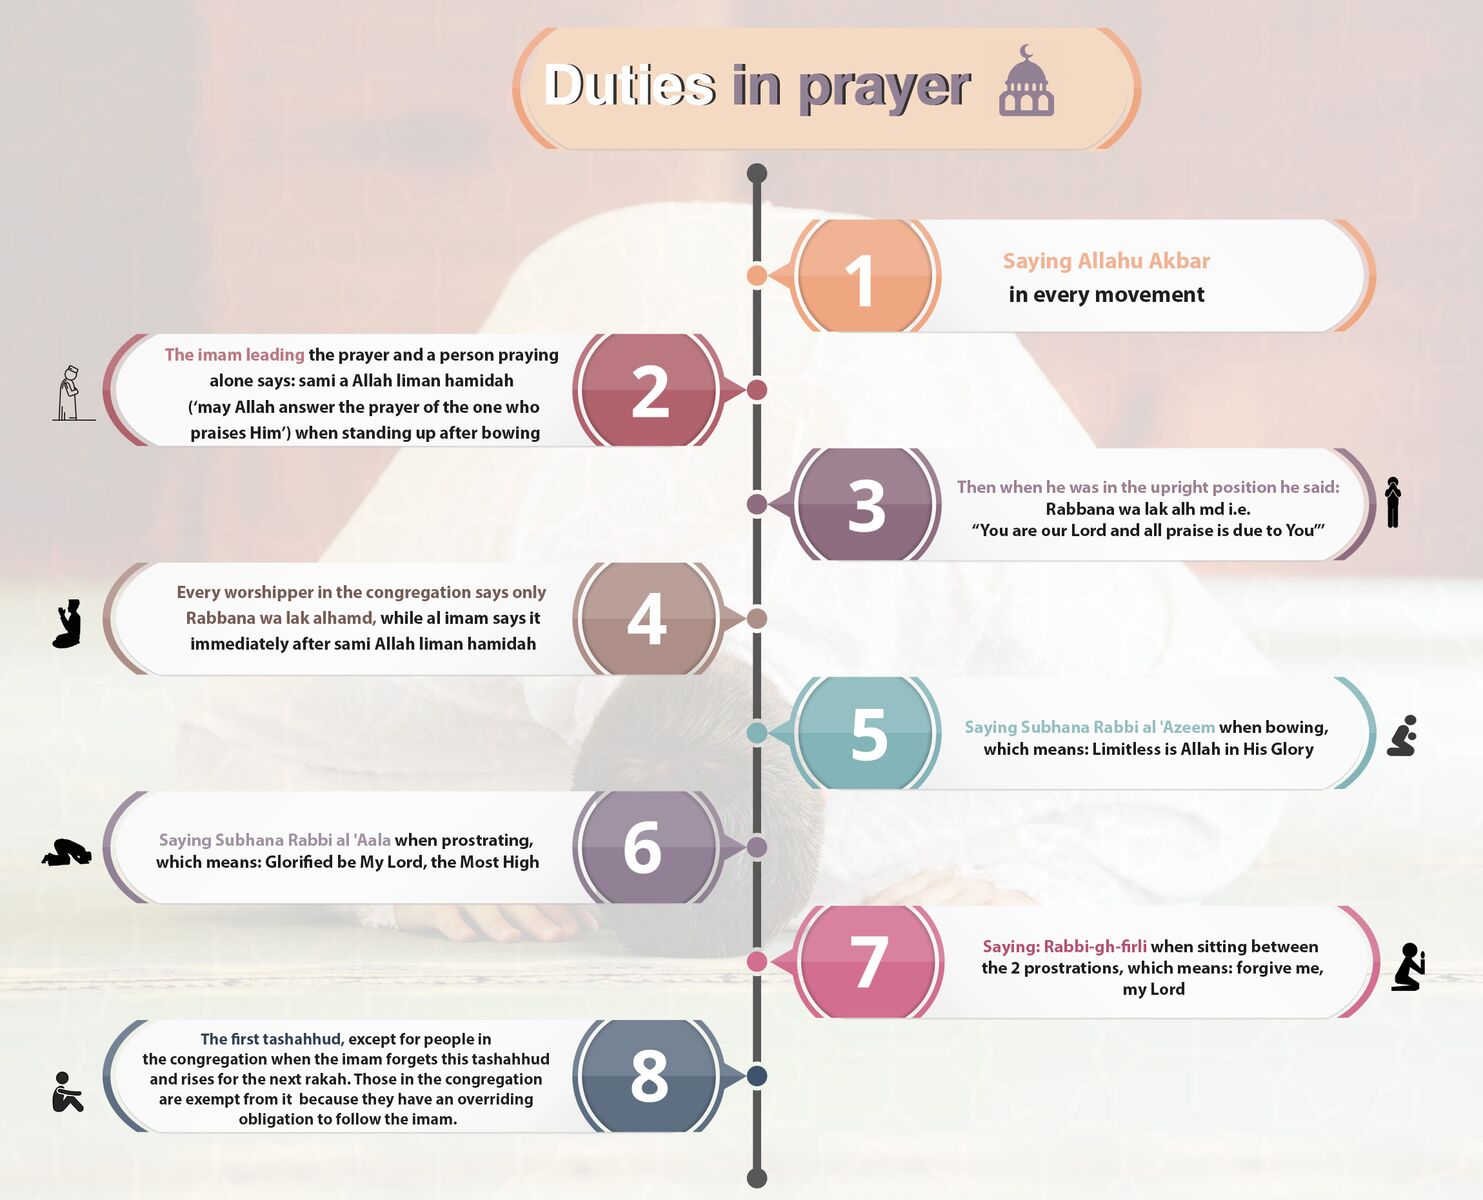 Duties in prayer